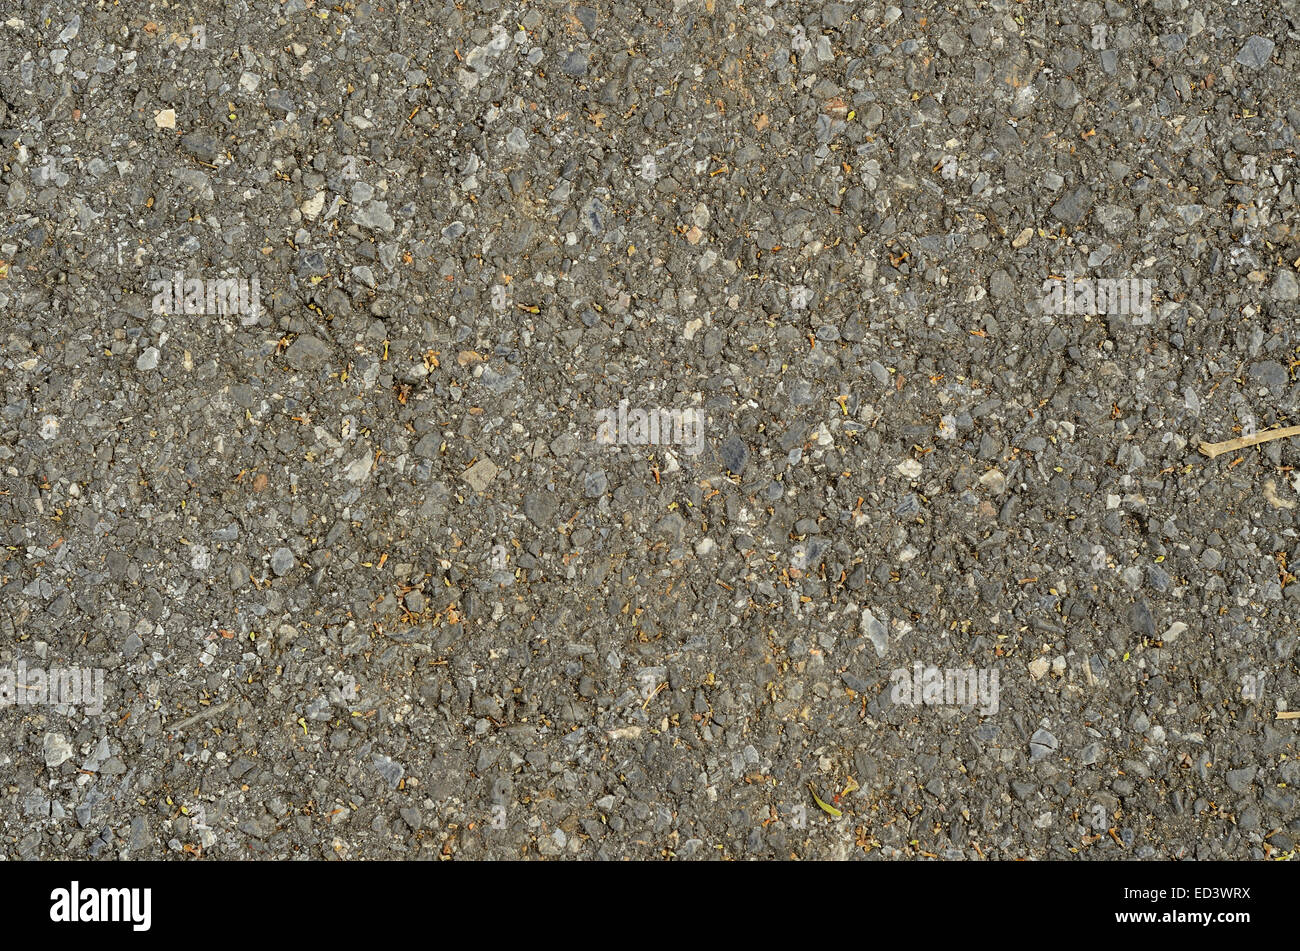 beutiful gray toneThai urban road texture Stock Photo